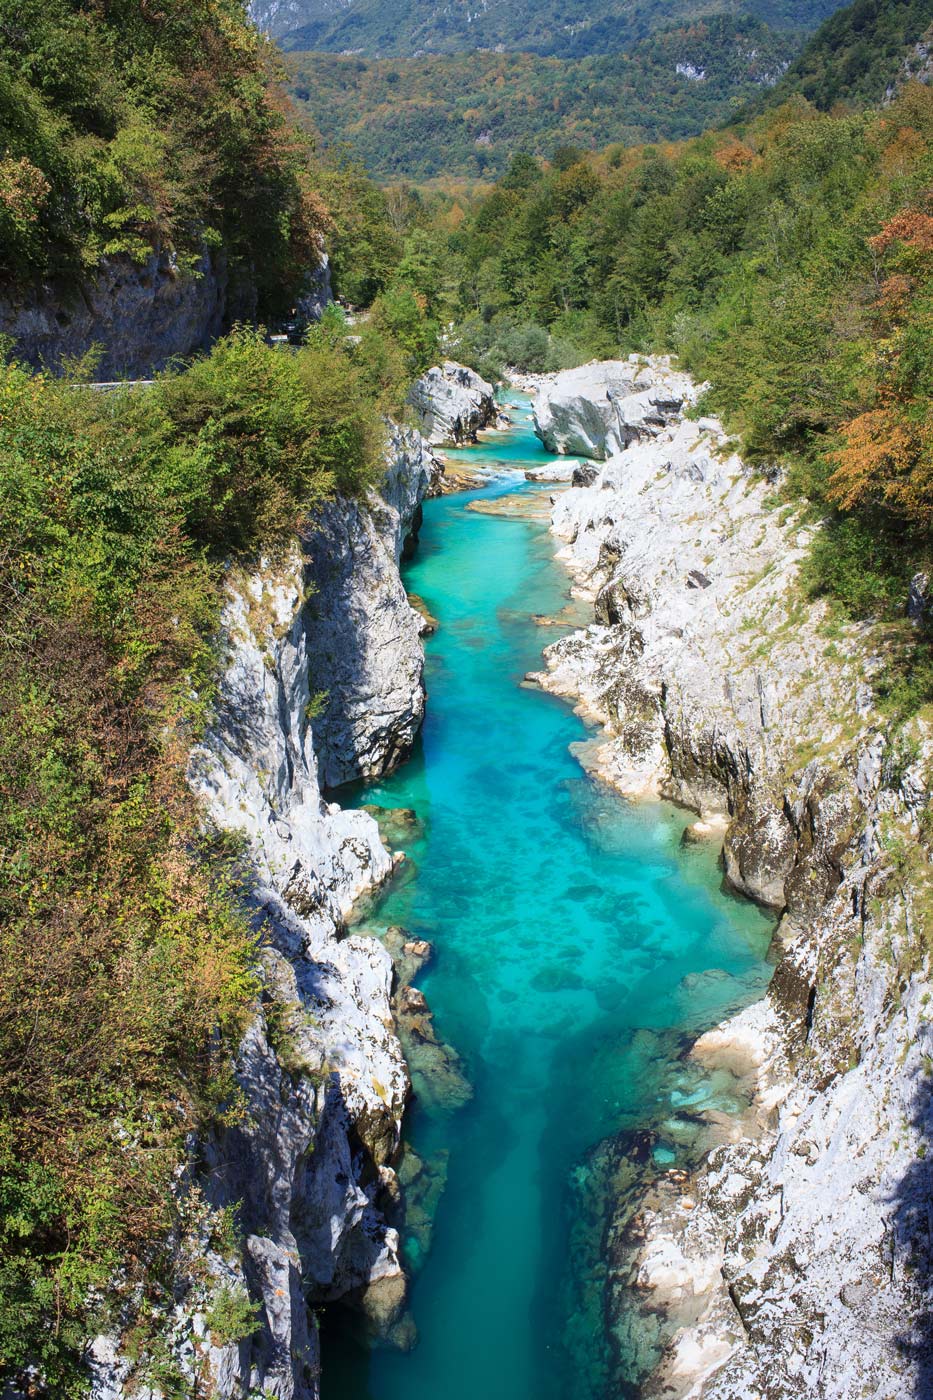 View of Soca river in Slovenia